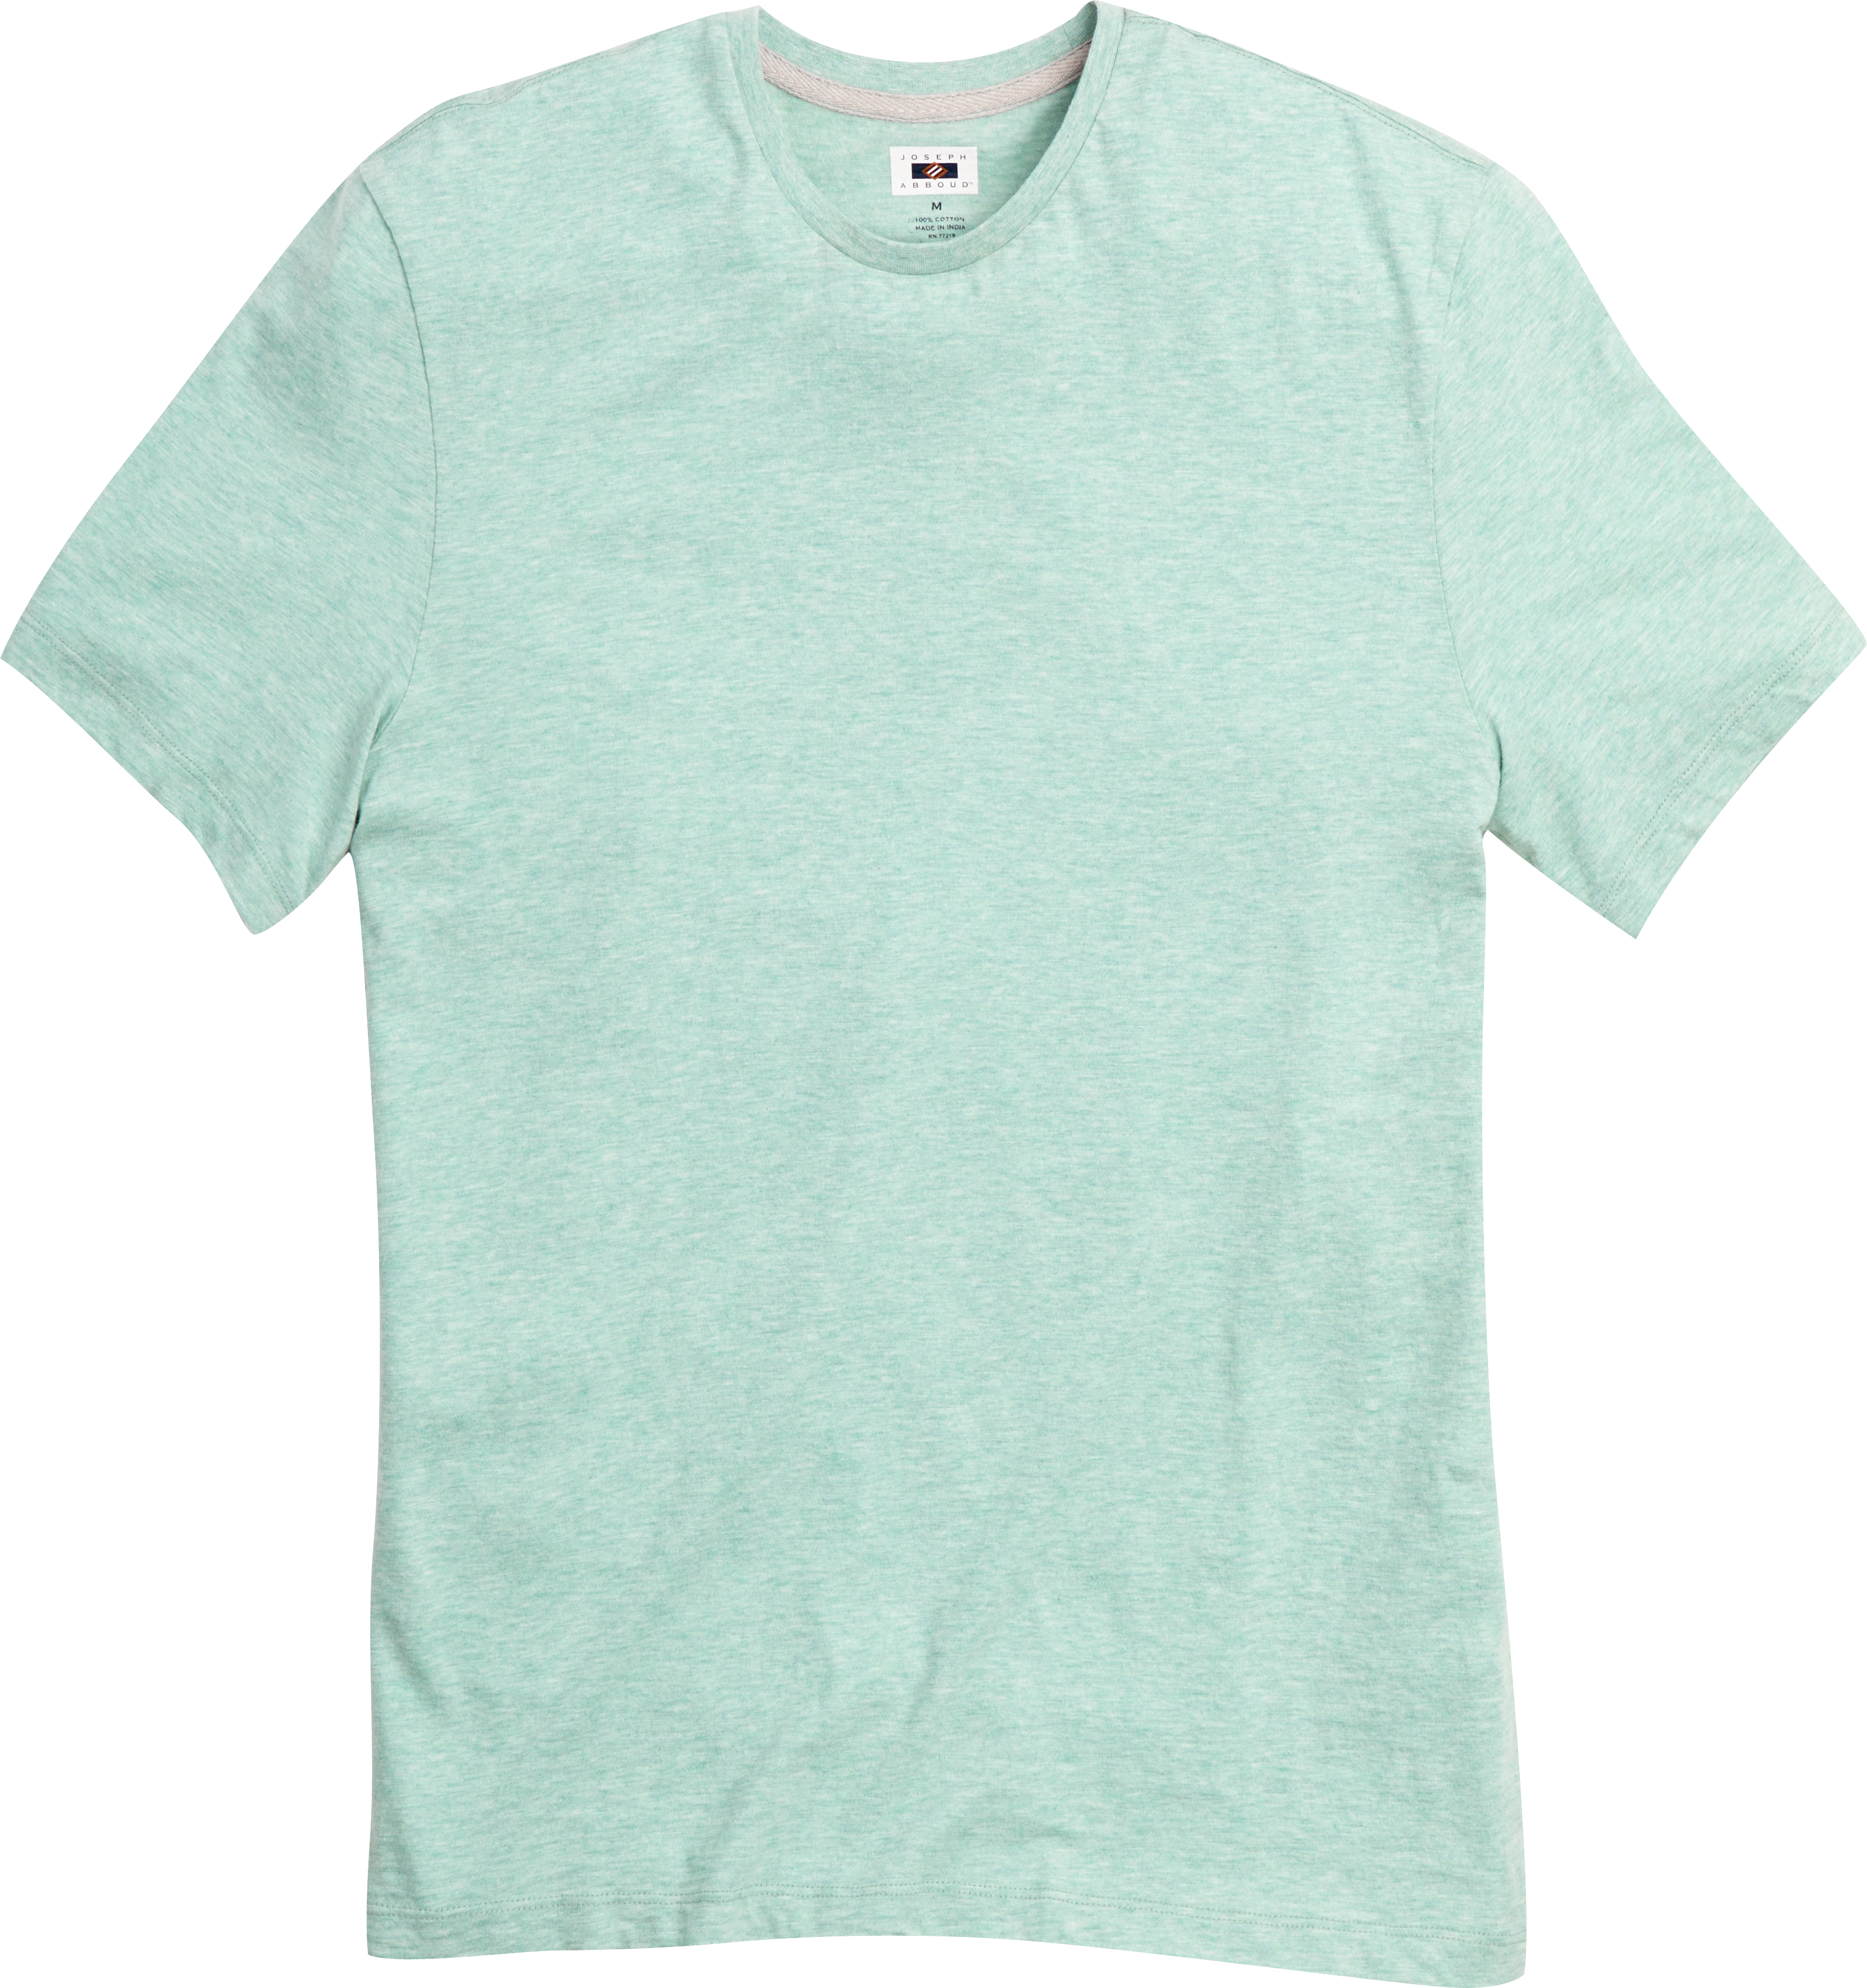 Joseph Abboud Seafoam Green Fit Crewneck Tee Shirt - Men's Sale | Men's ...